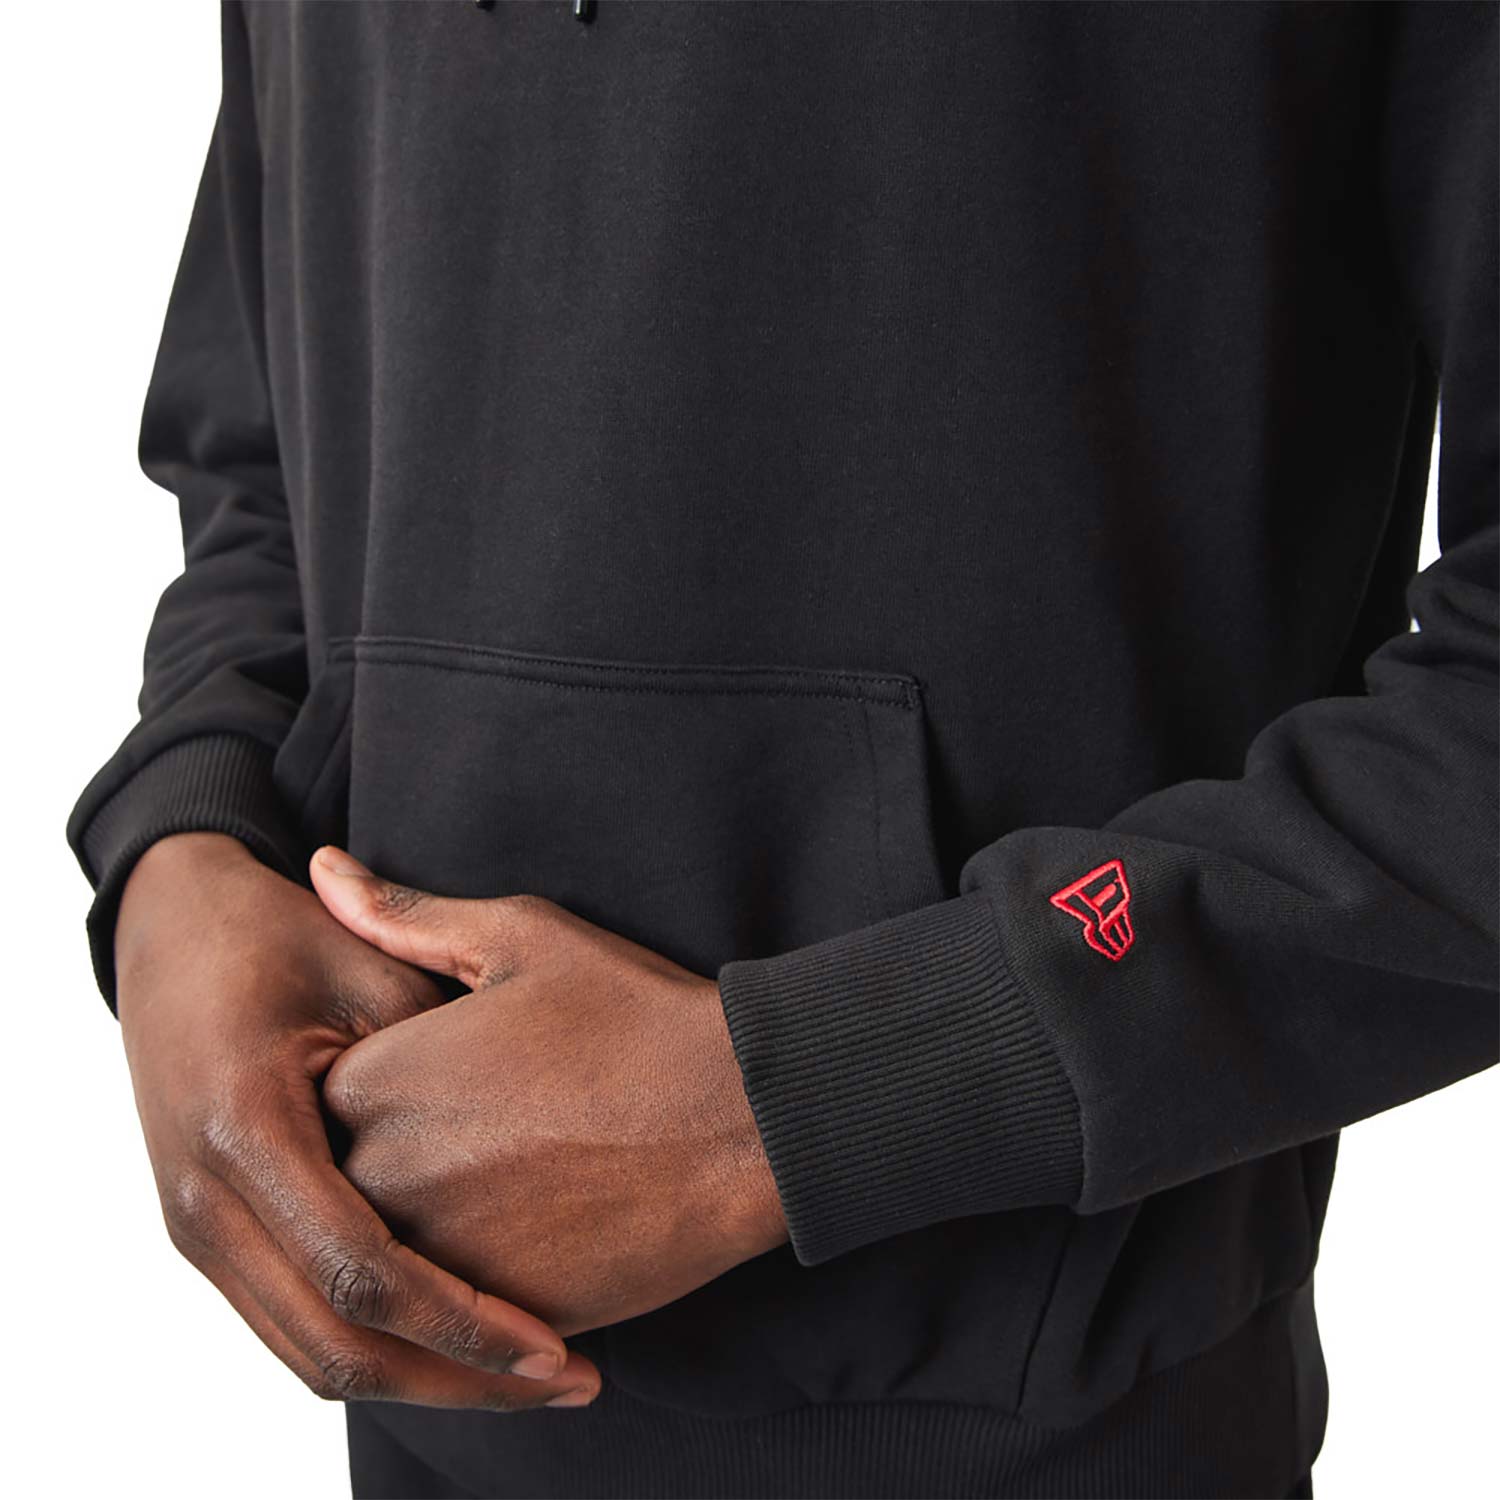 Chicago Bulls NBA Team Logo Black Hoodie